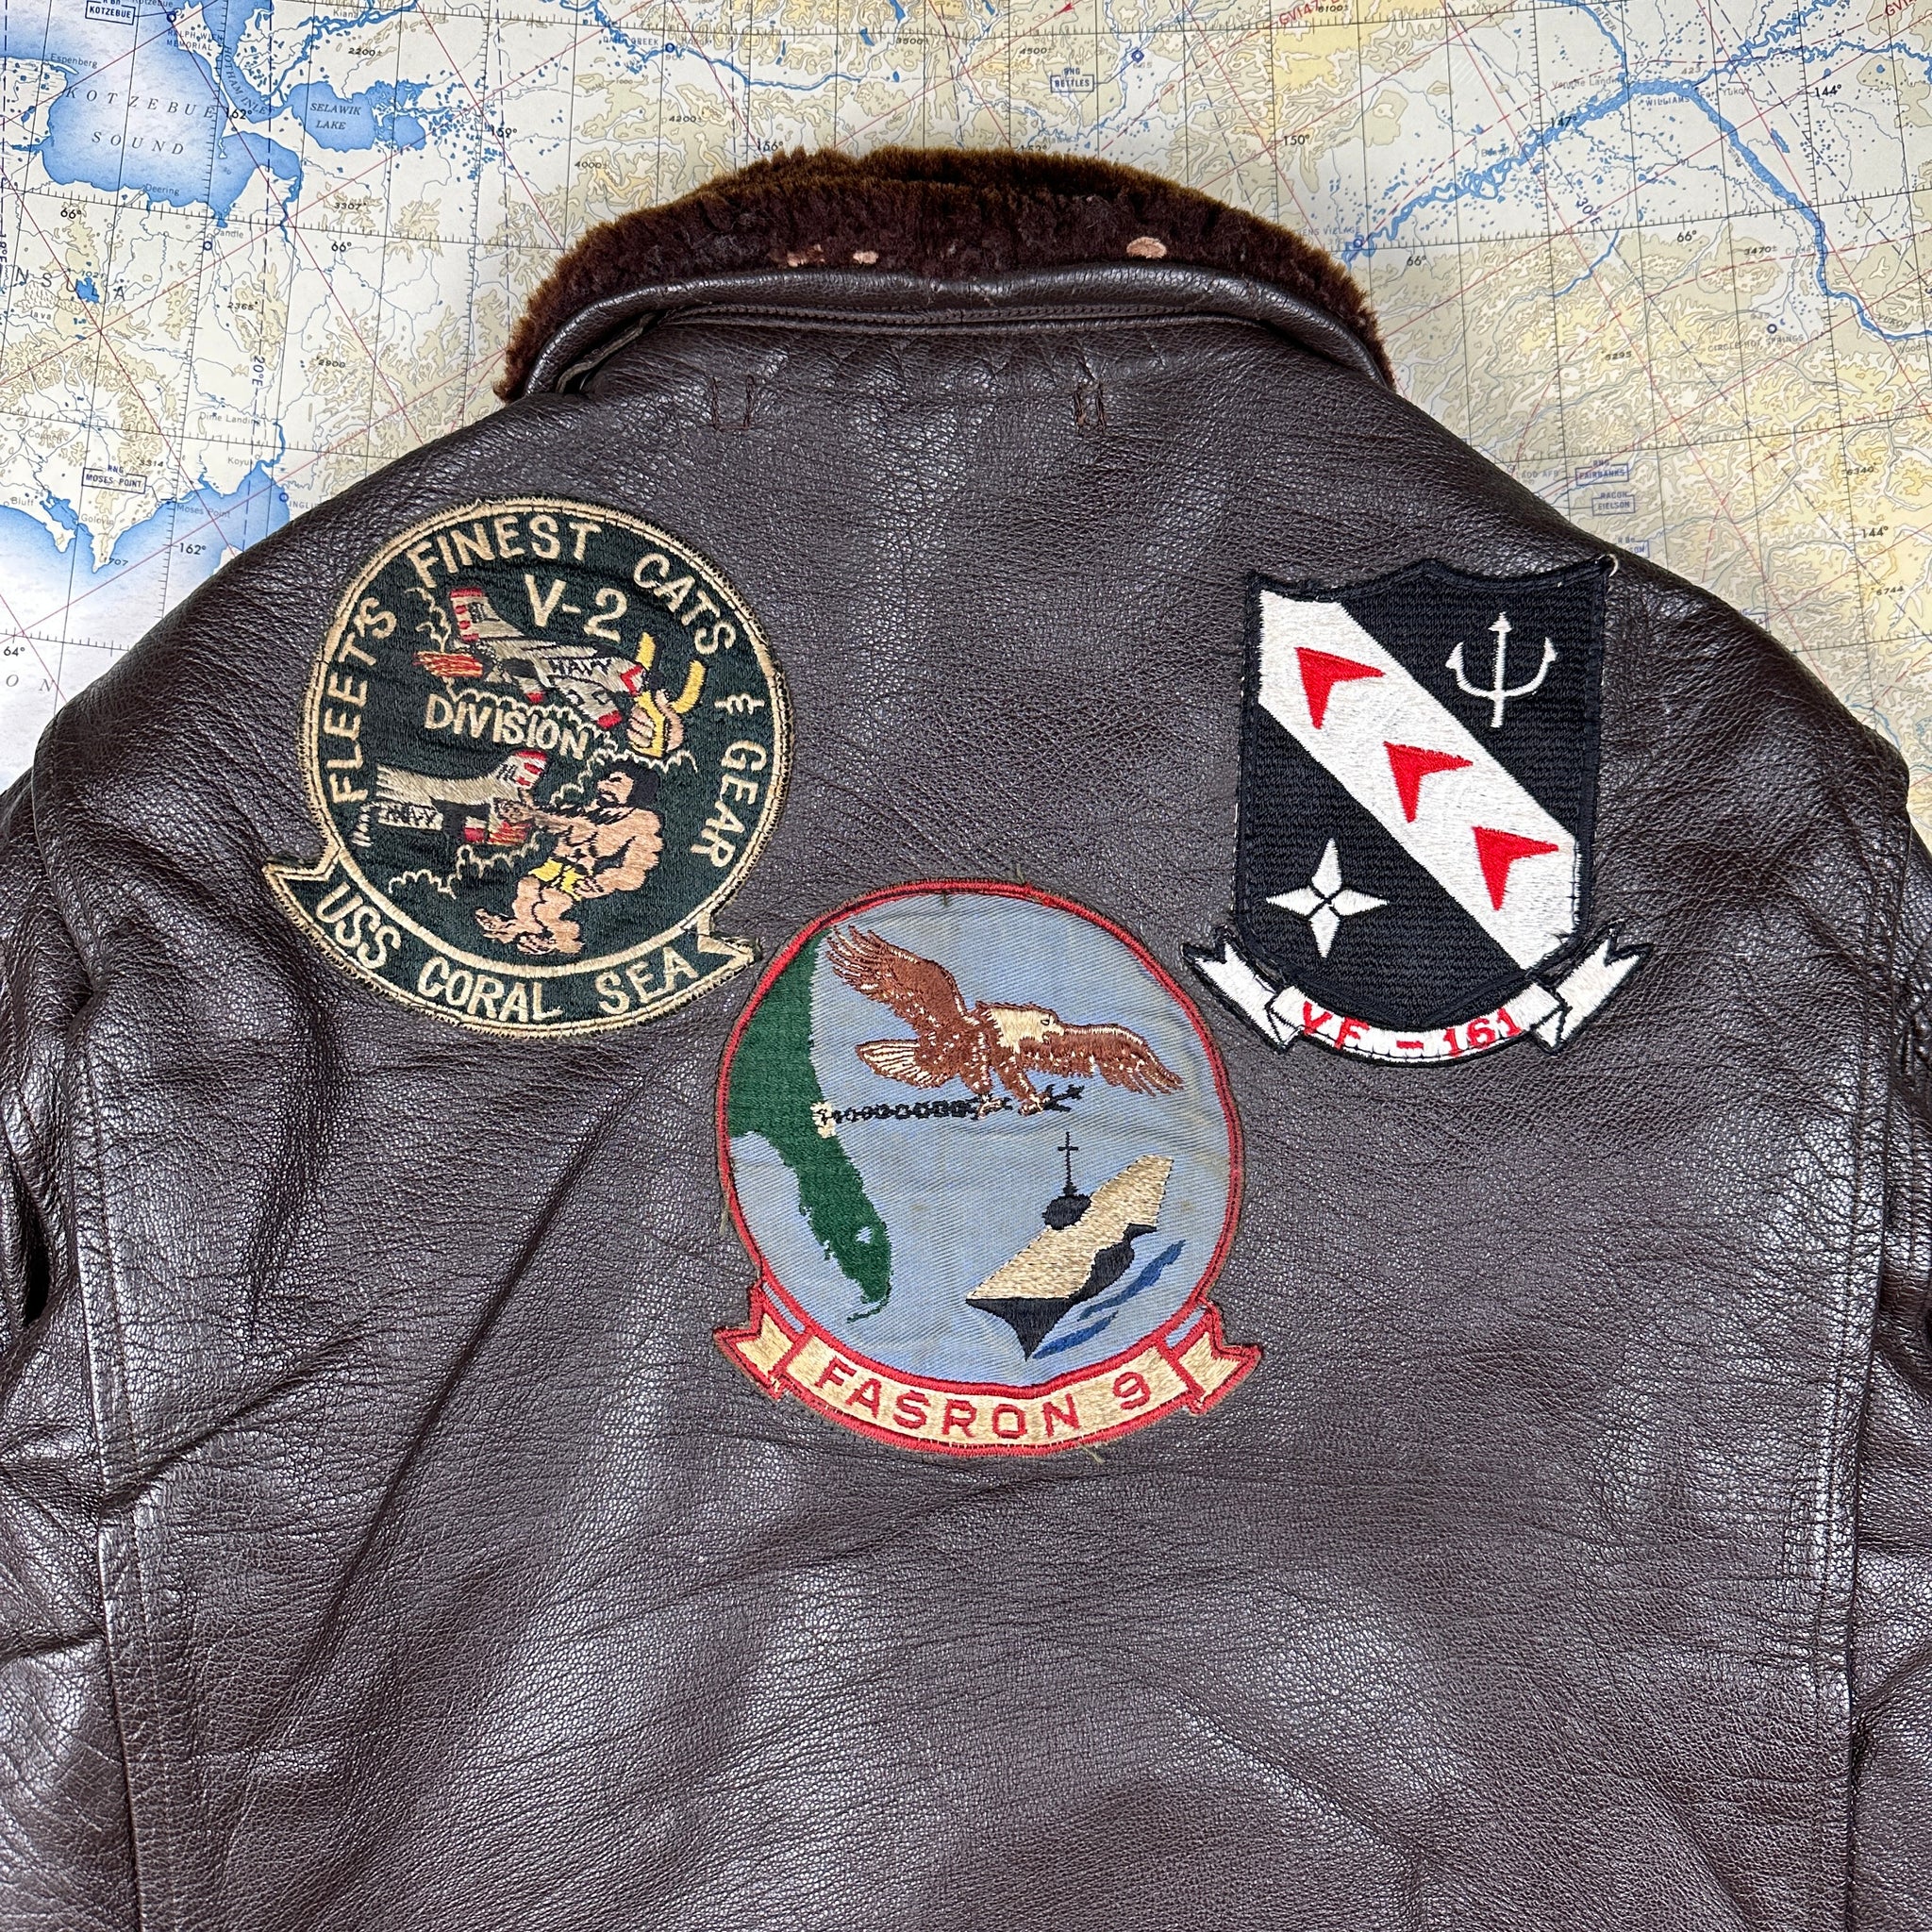 us-navy-g1-flight-jacket-patched-8_1024x1024@2x.jpg